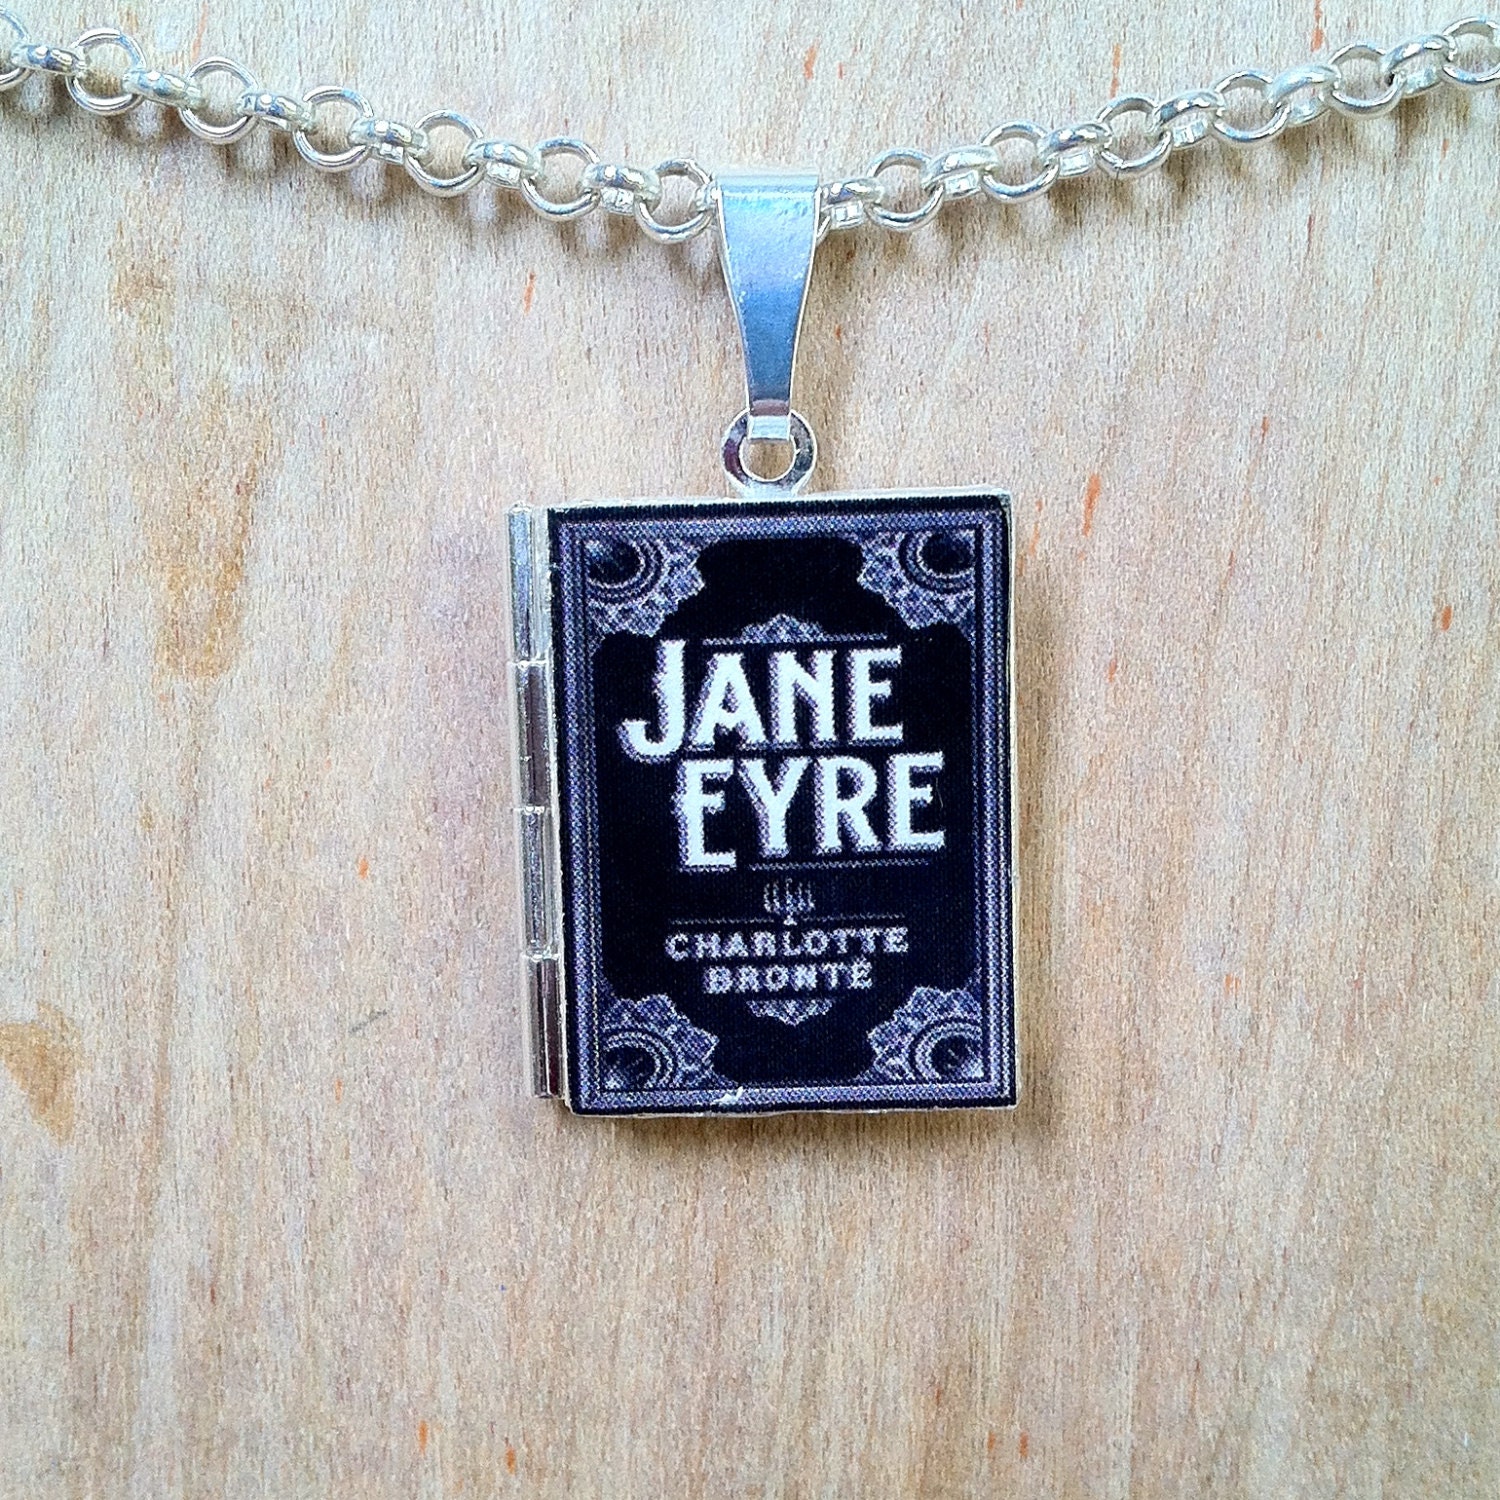 Charlotte Brontë - Jane Eyre (2 cover options) - Literary Locket